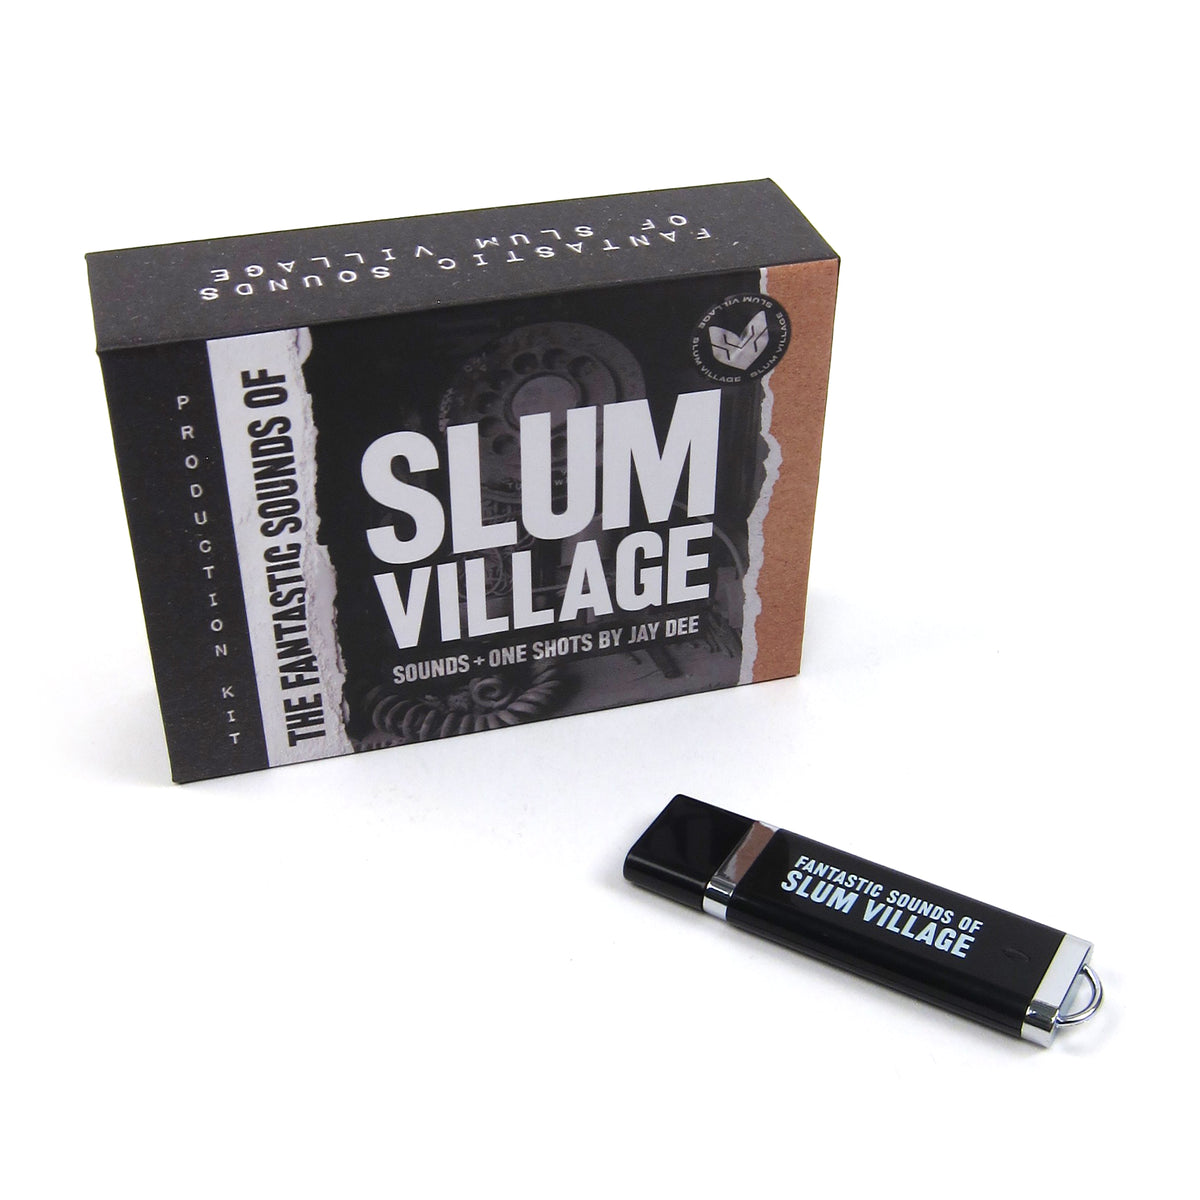 Slum village sounds+one shots by jay dee - DTM・DAW